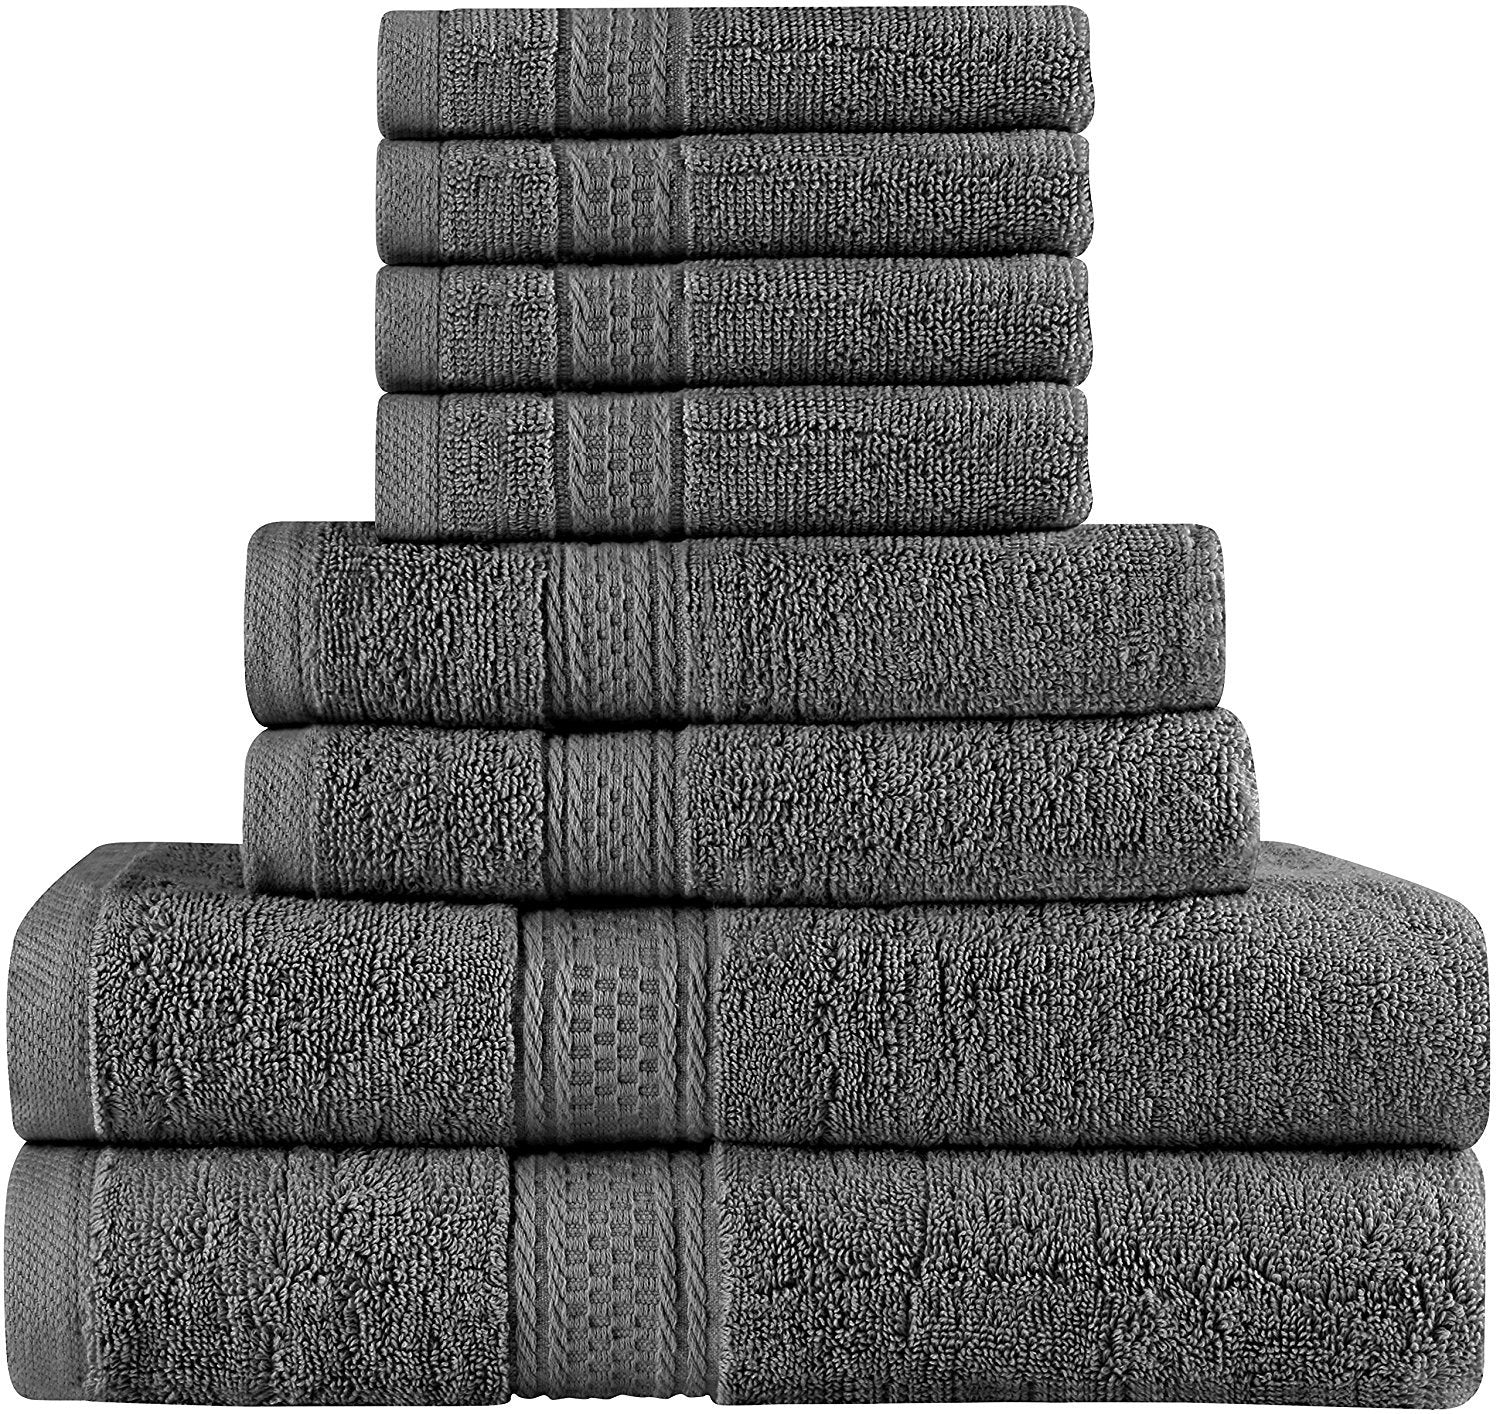 https://cdn.shopify.com/s/files/1/2059/3099/products/100-ring-spun-cotton-premium-8-piece-towel-sets-towel-sets-down-cotton-grey-656583_1800x1800.jpg?v=1601575566